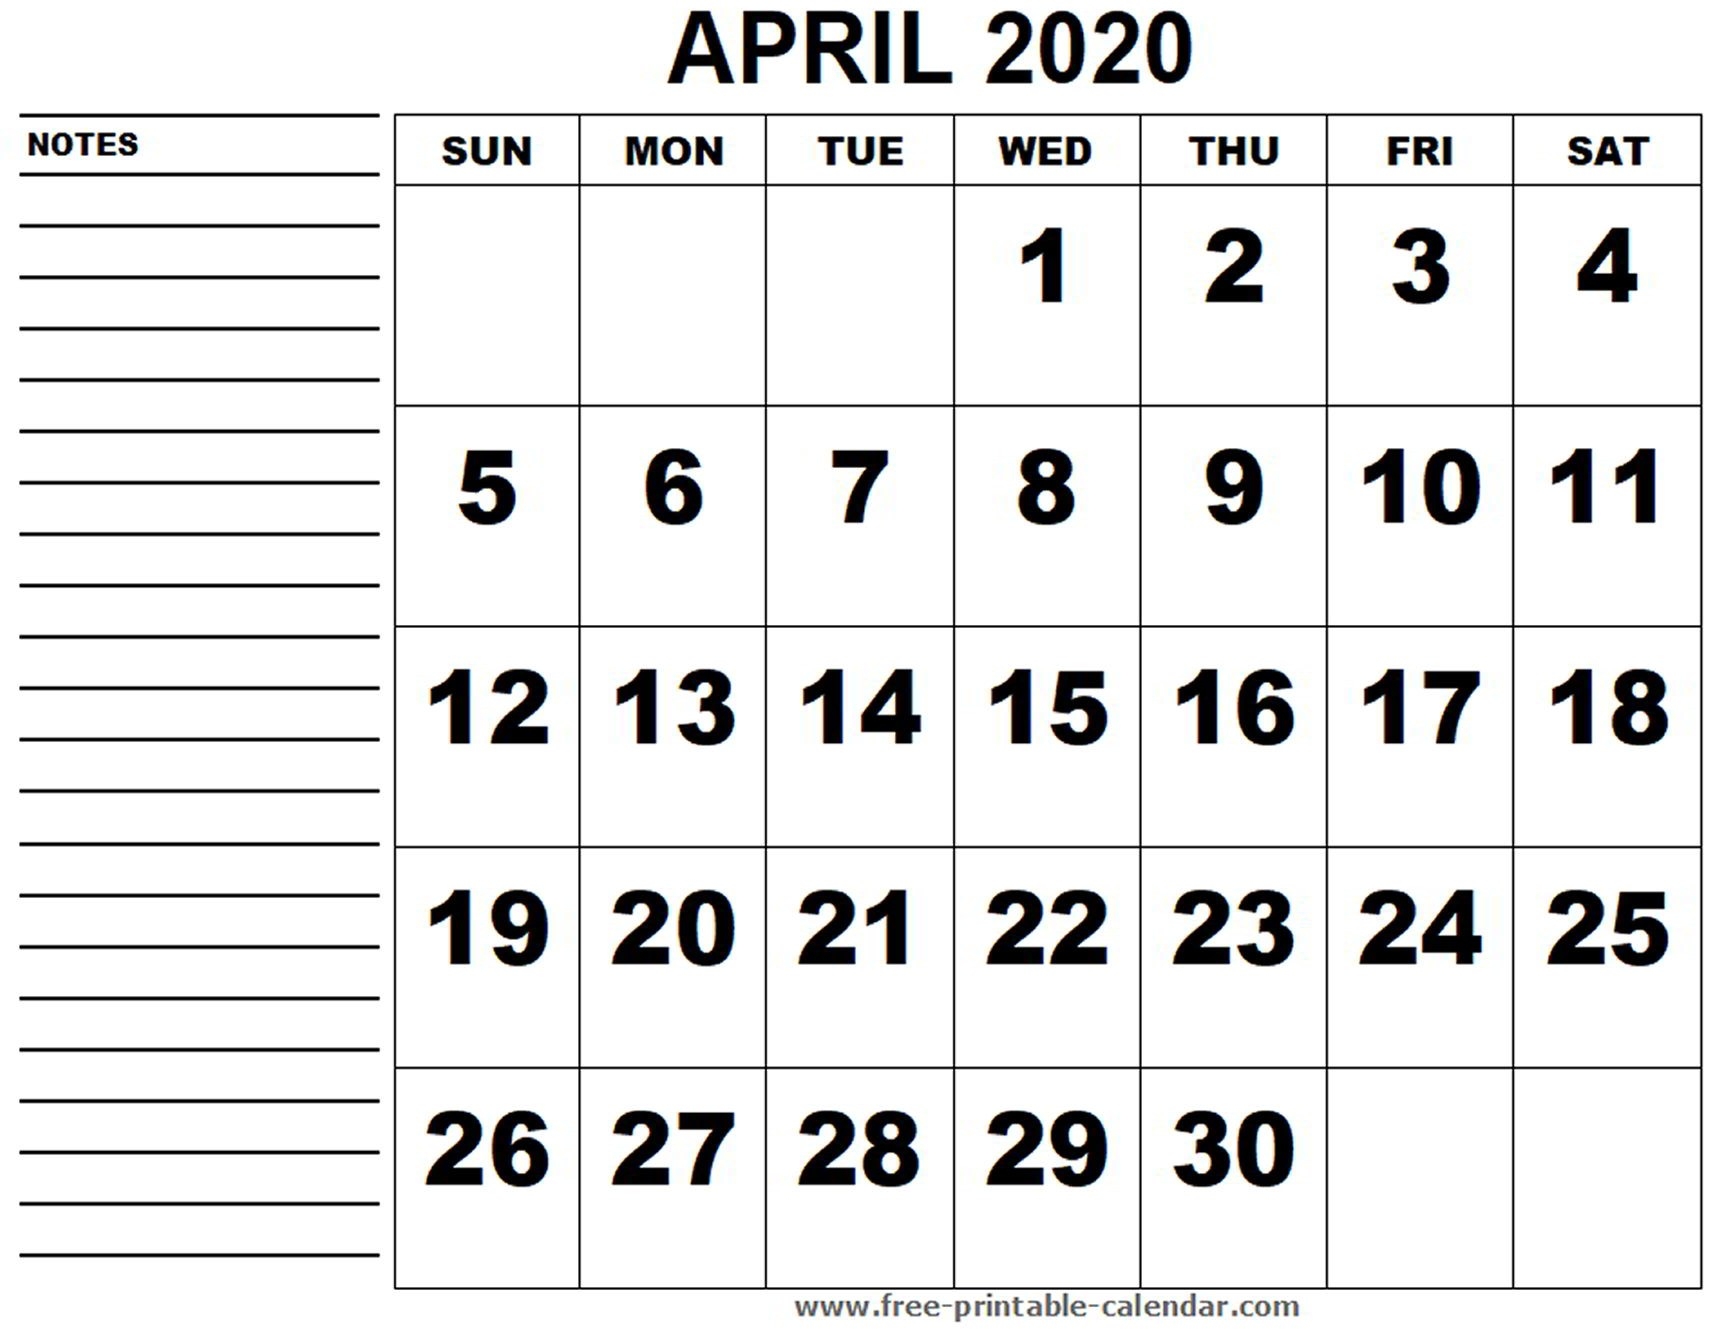 Printable Calendar April 2020 - Free-Printable-Calendar  July 2020 To June 2020 Australia Calendar